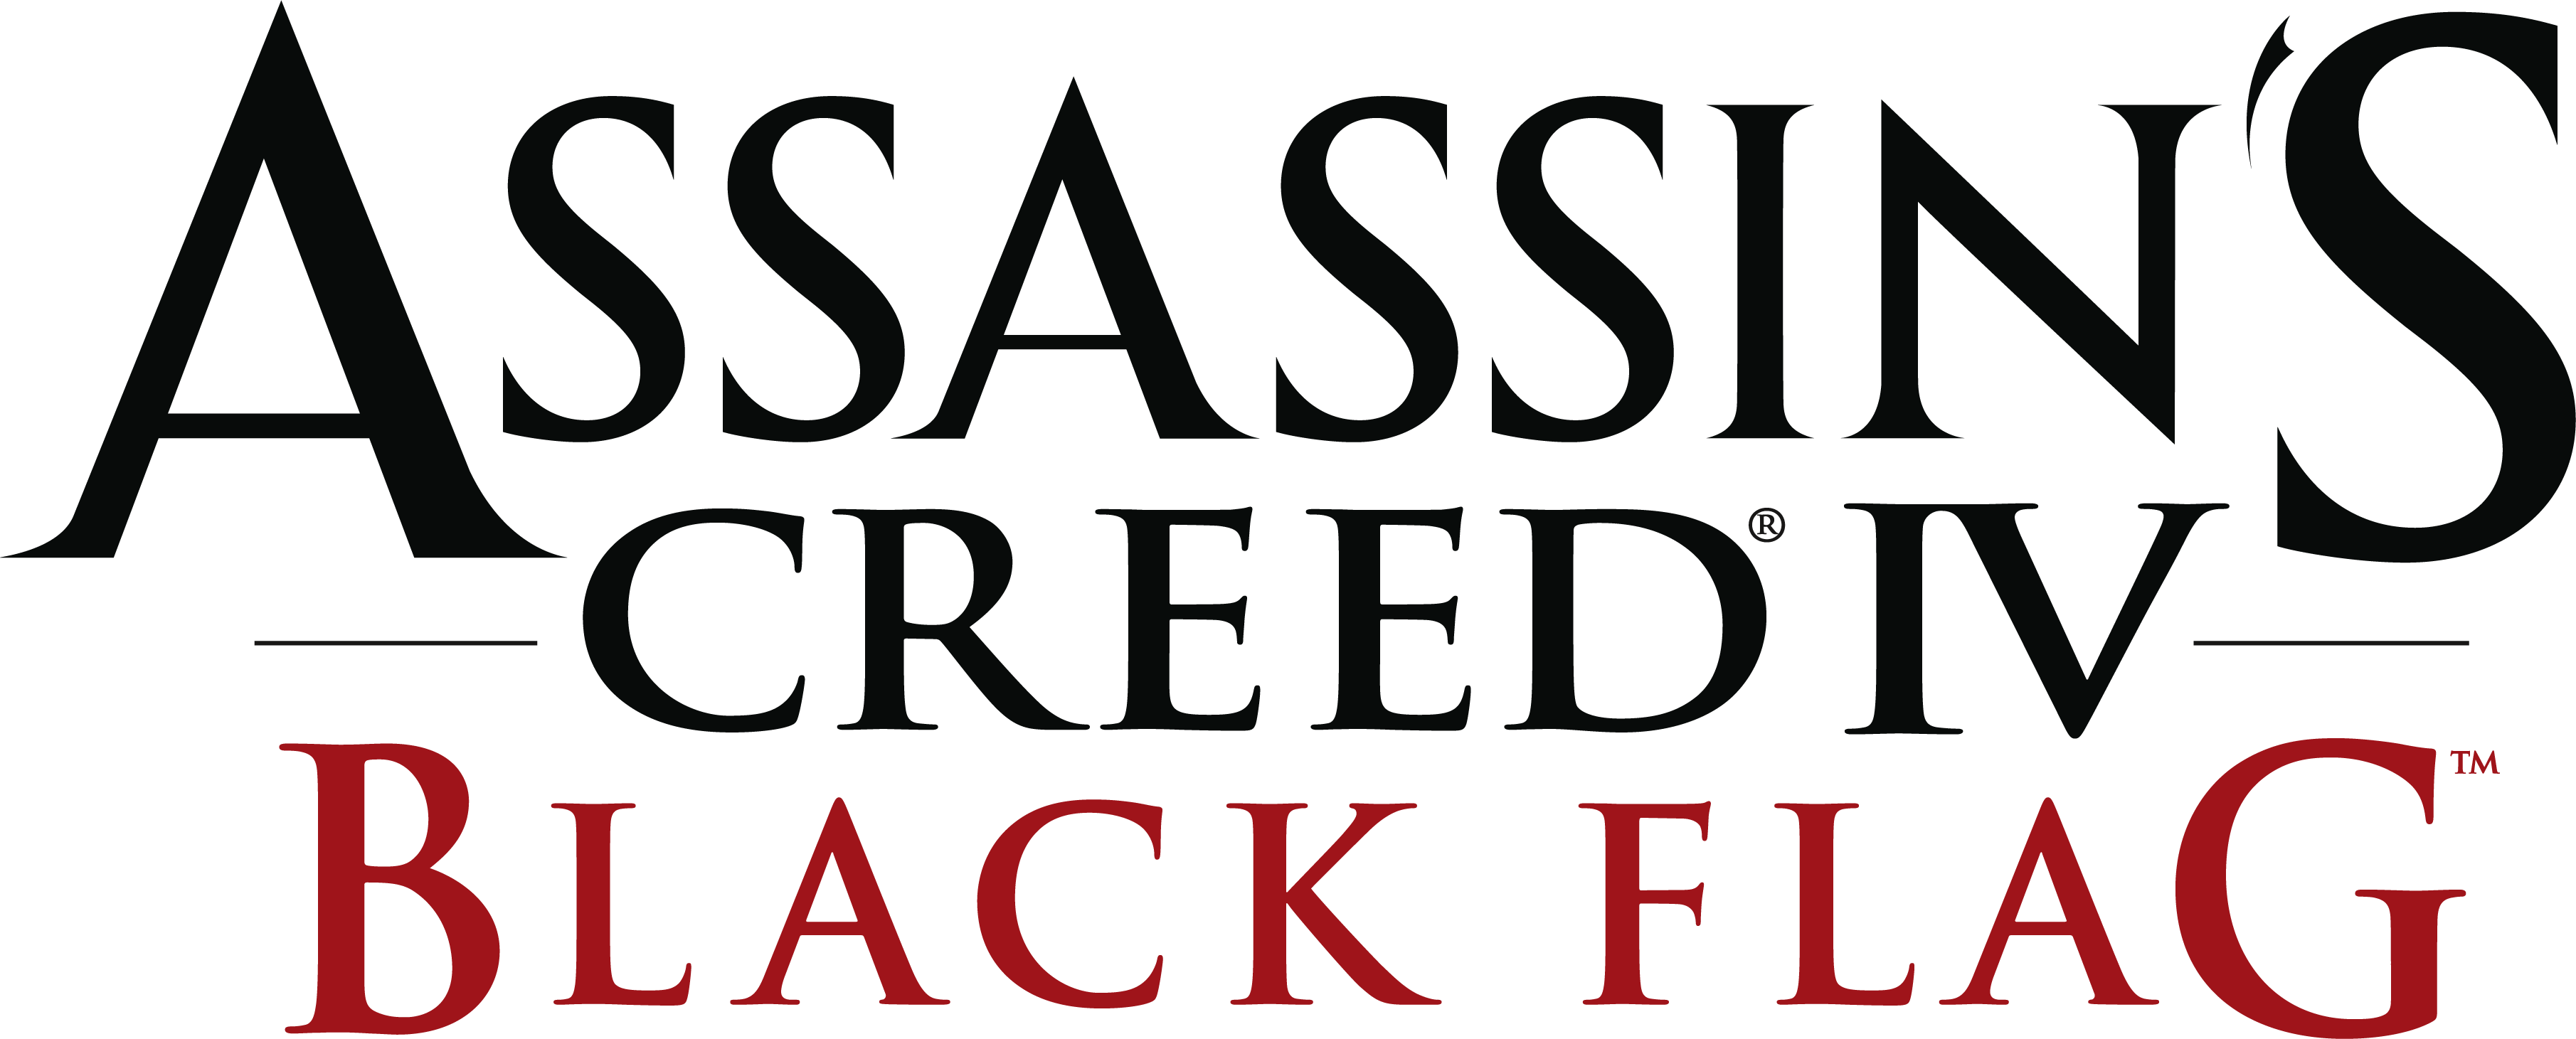 Assassin’s Creed IV Black Flag logo